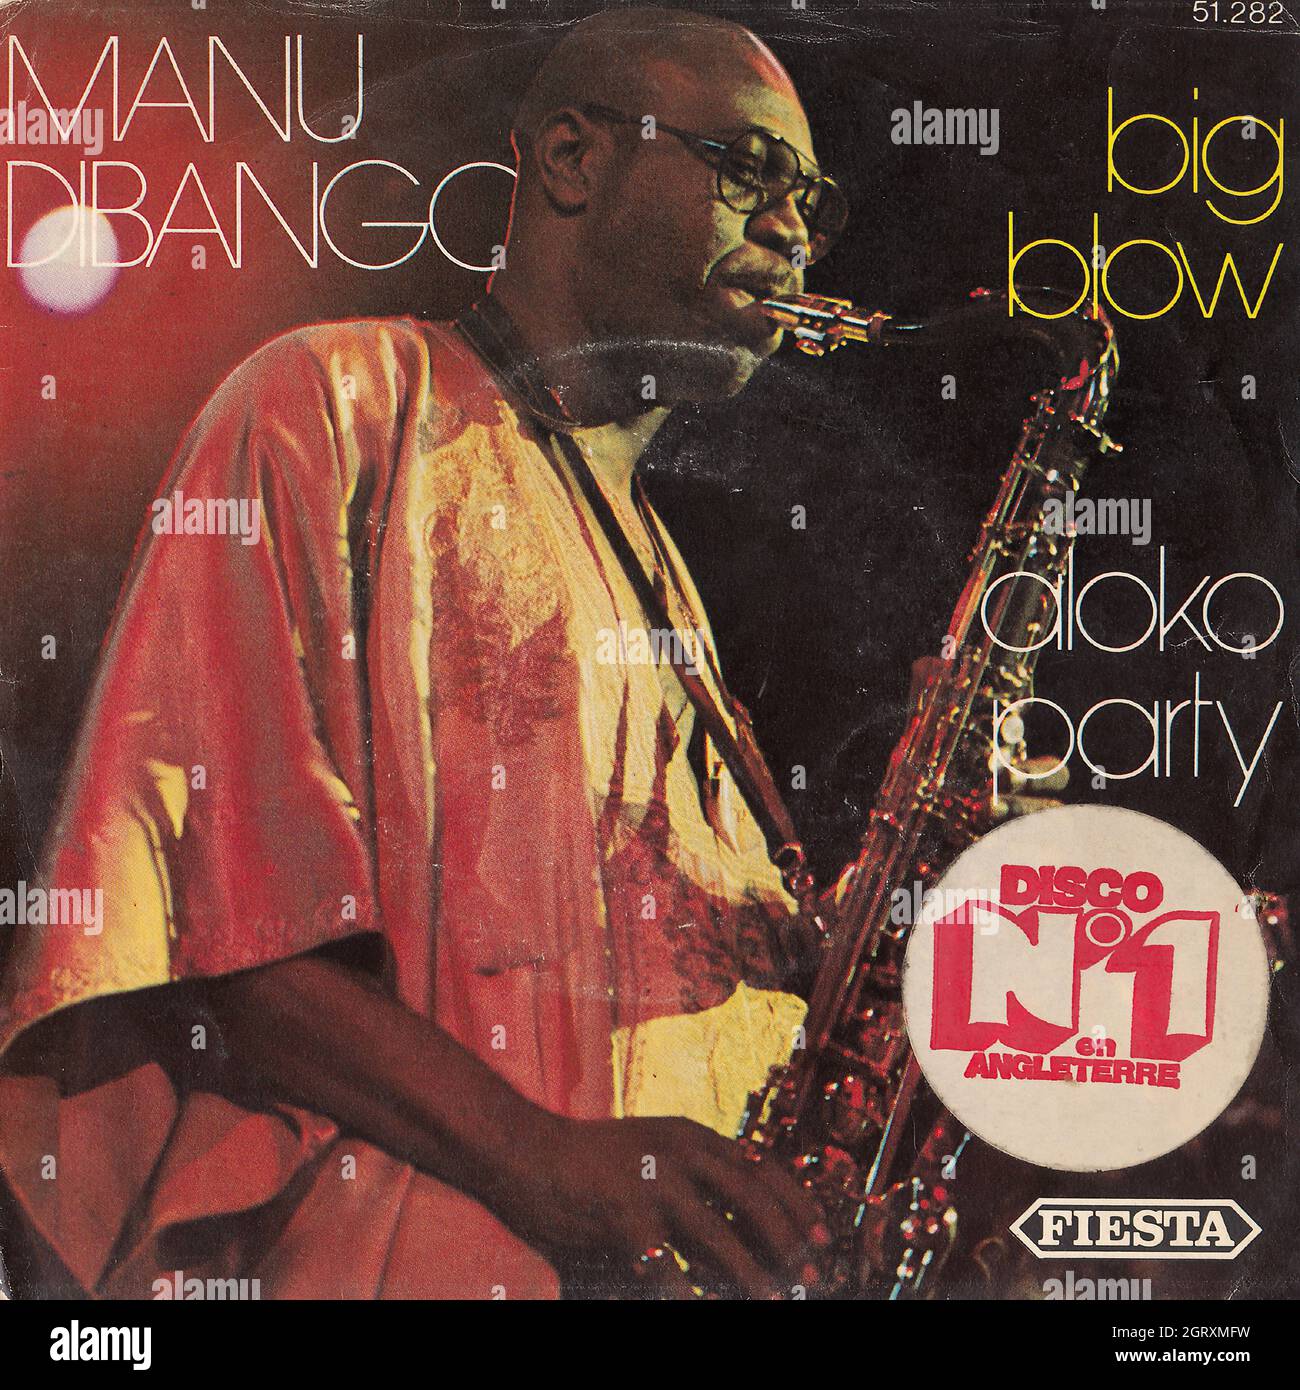 Manu Dibango - Big blow - Aloko party 45rpm - Vintage Vinyl Record Cover Stock Photo